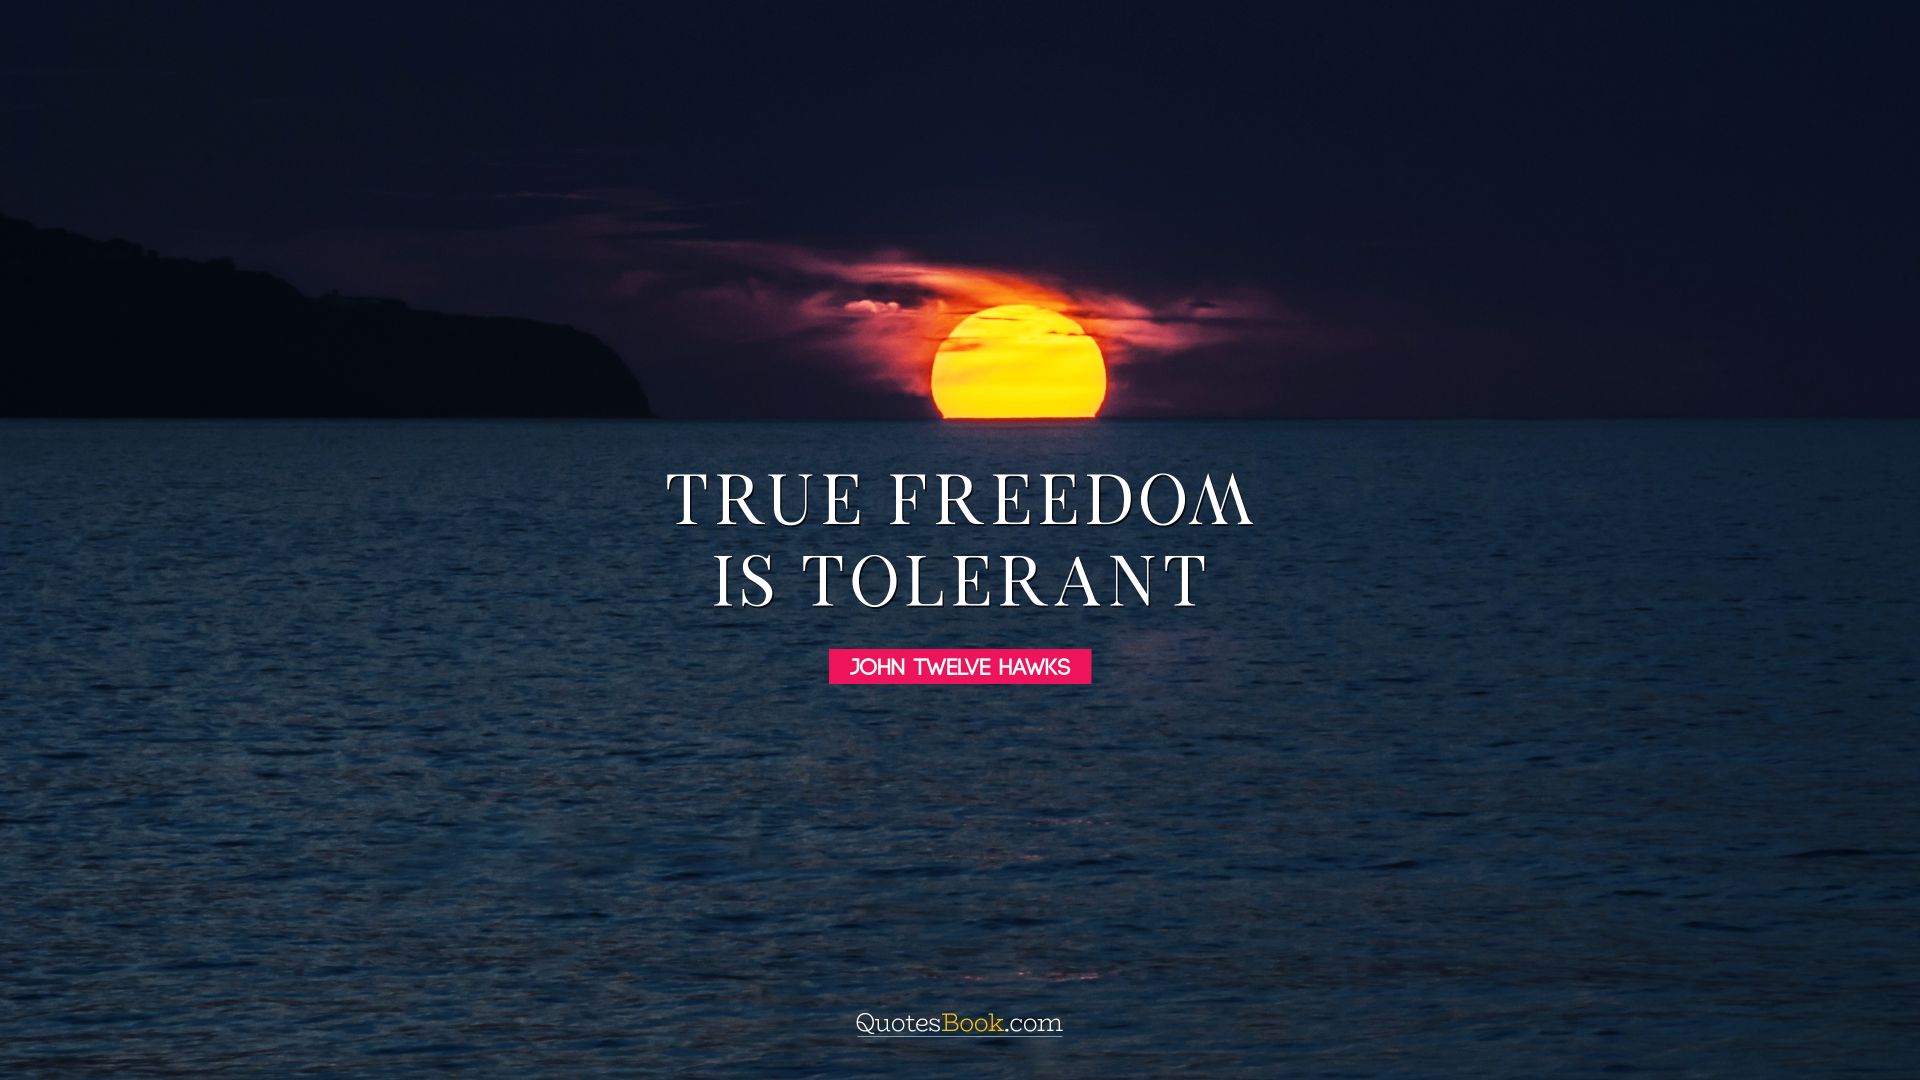 True freedom is tolerant. - Quote by John Twelve Hawks